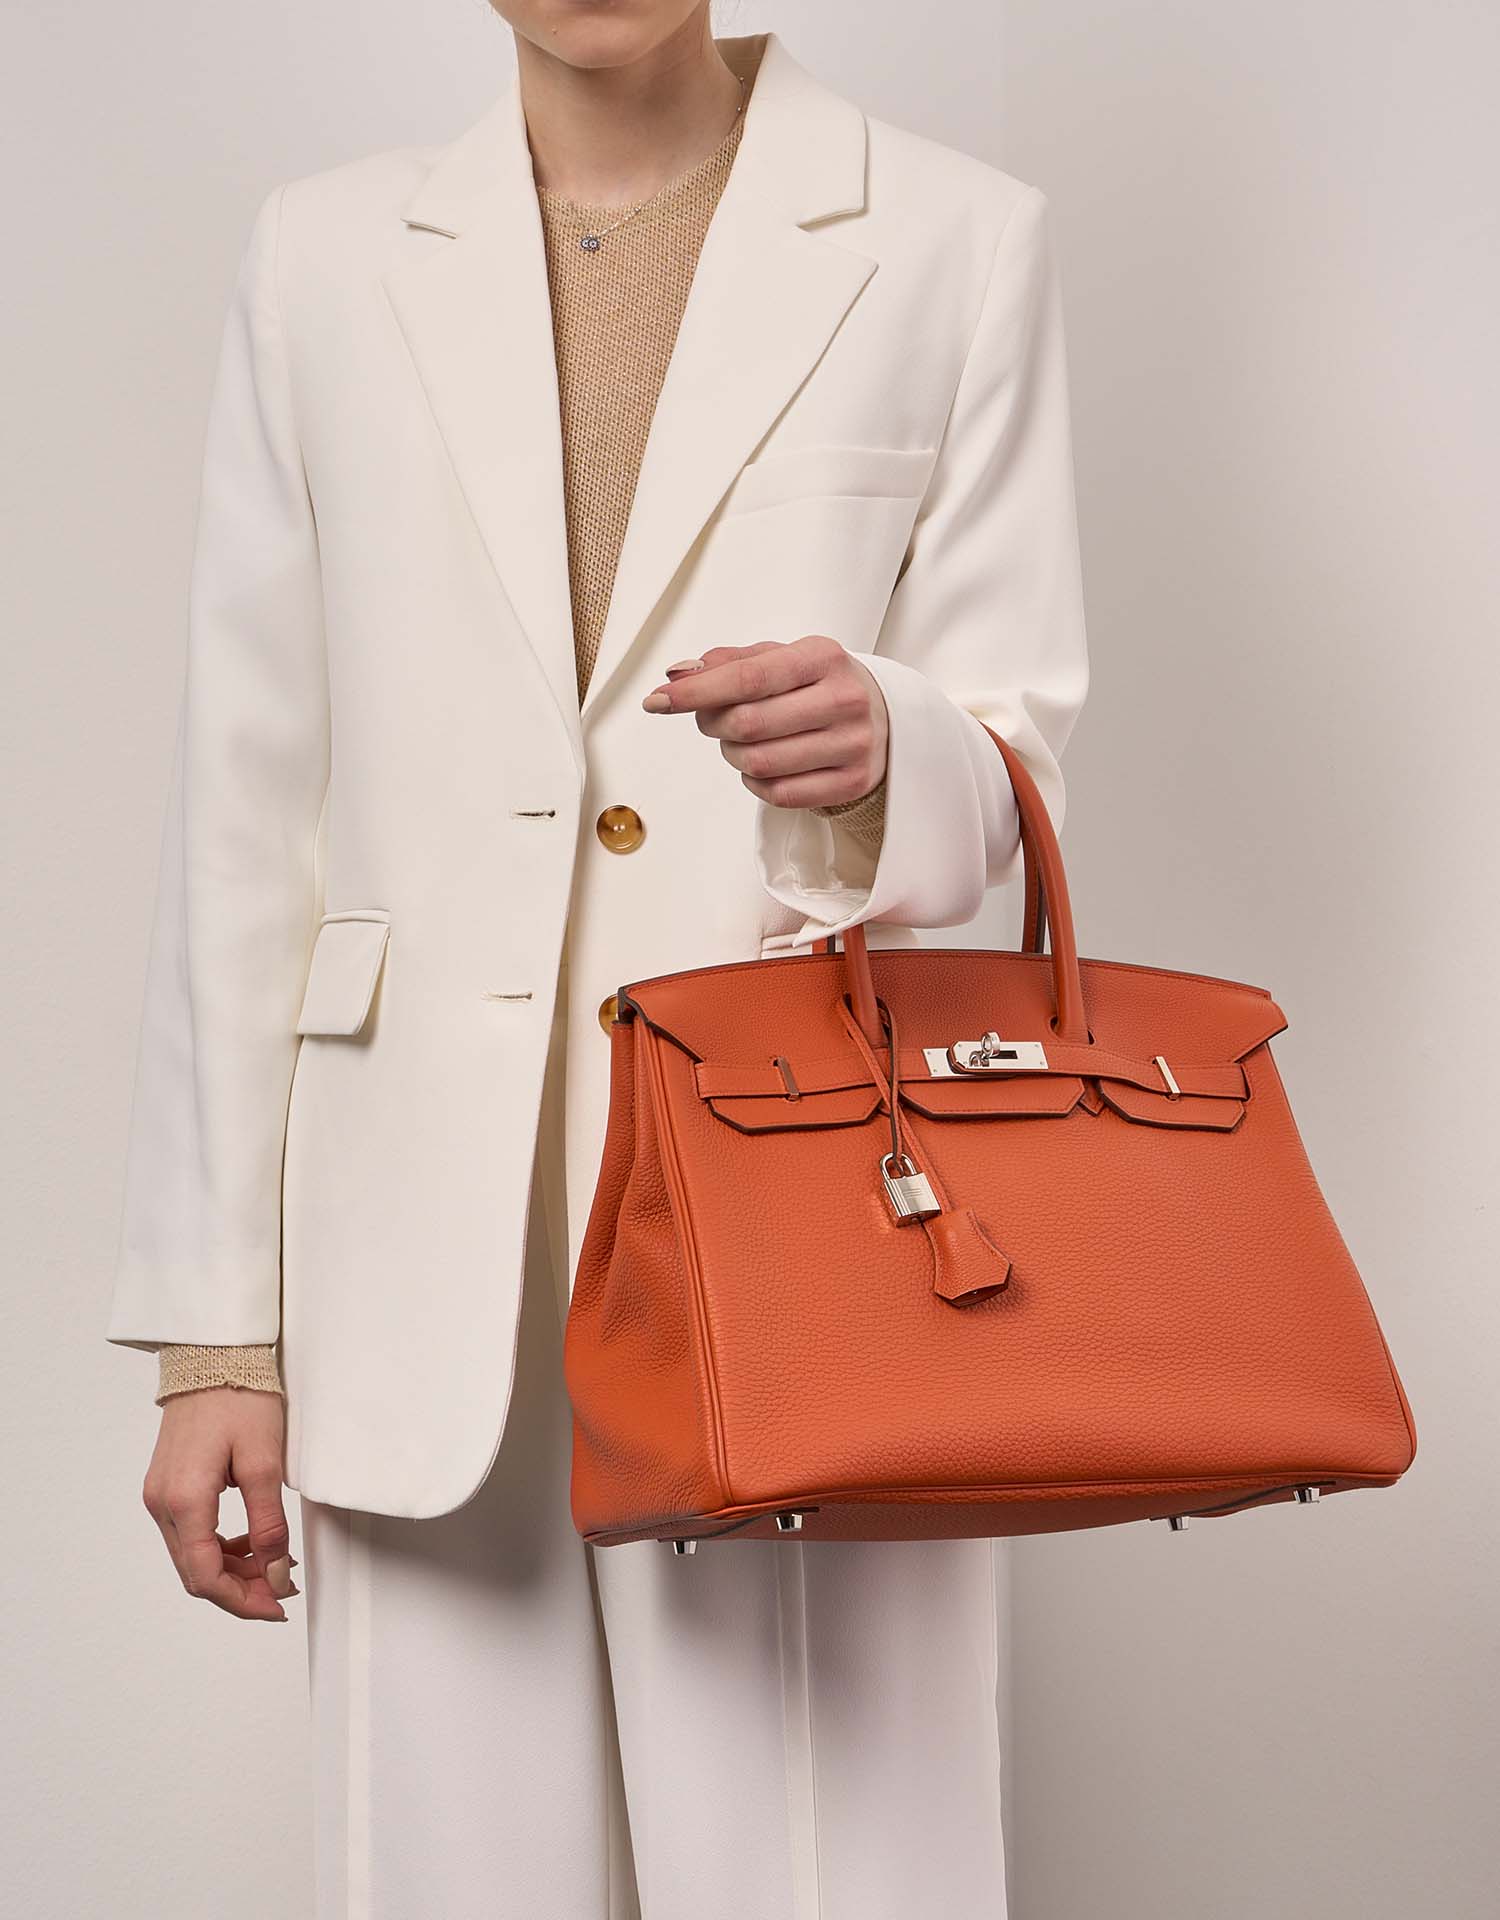 Hermès Birkin 35 OrangeH 1M | Sell your designer bag on Saclab.com